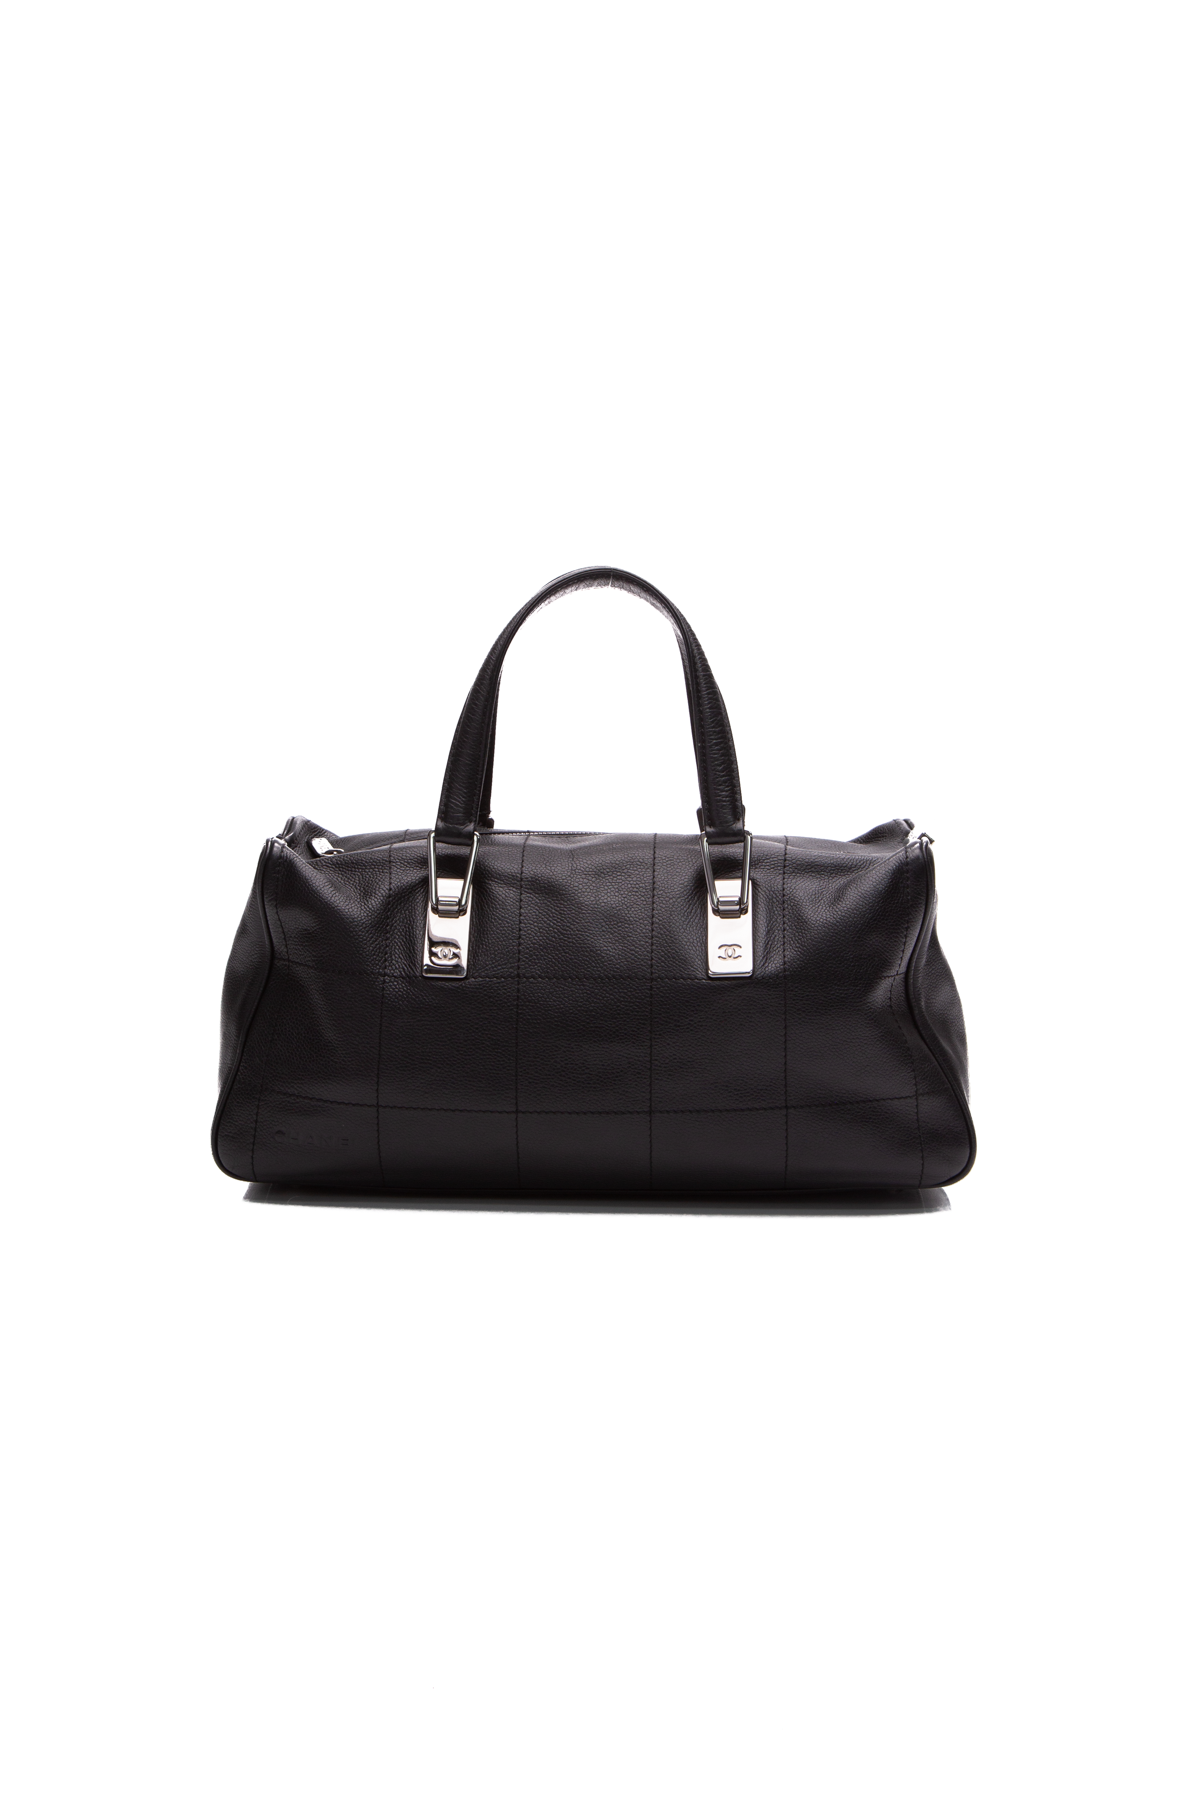 Chanel Black Leather CC Boston Bag Chanel